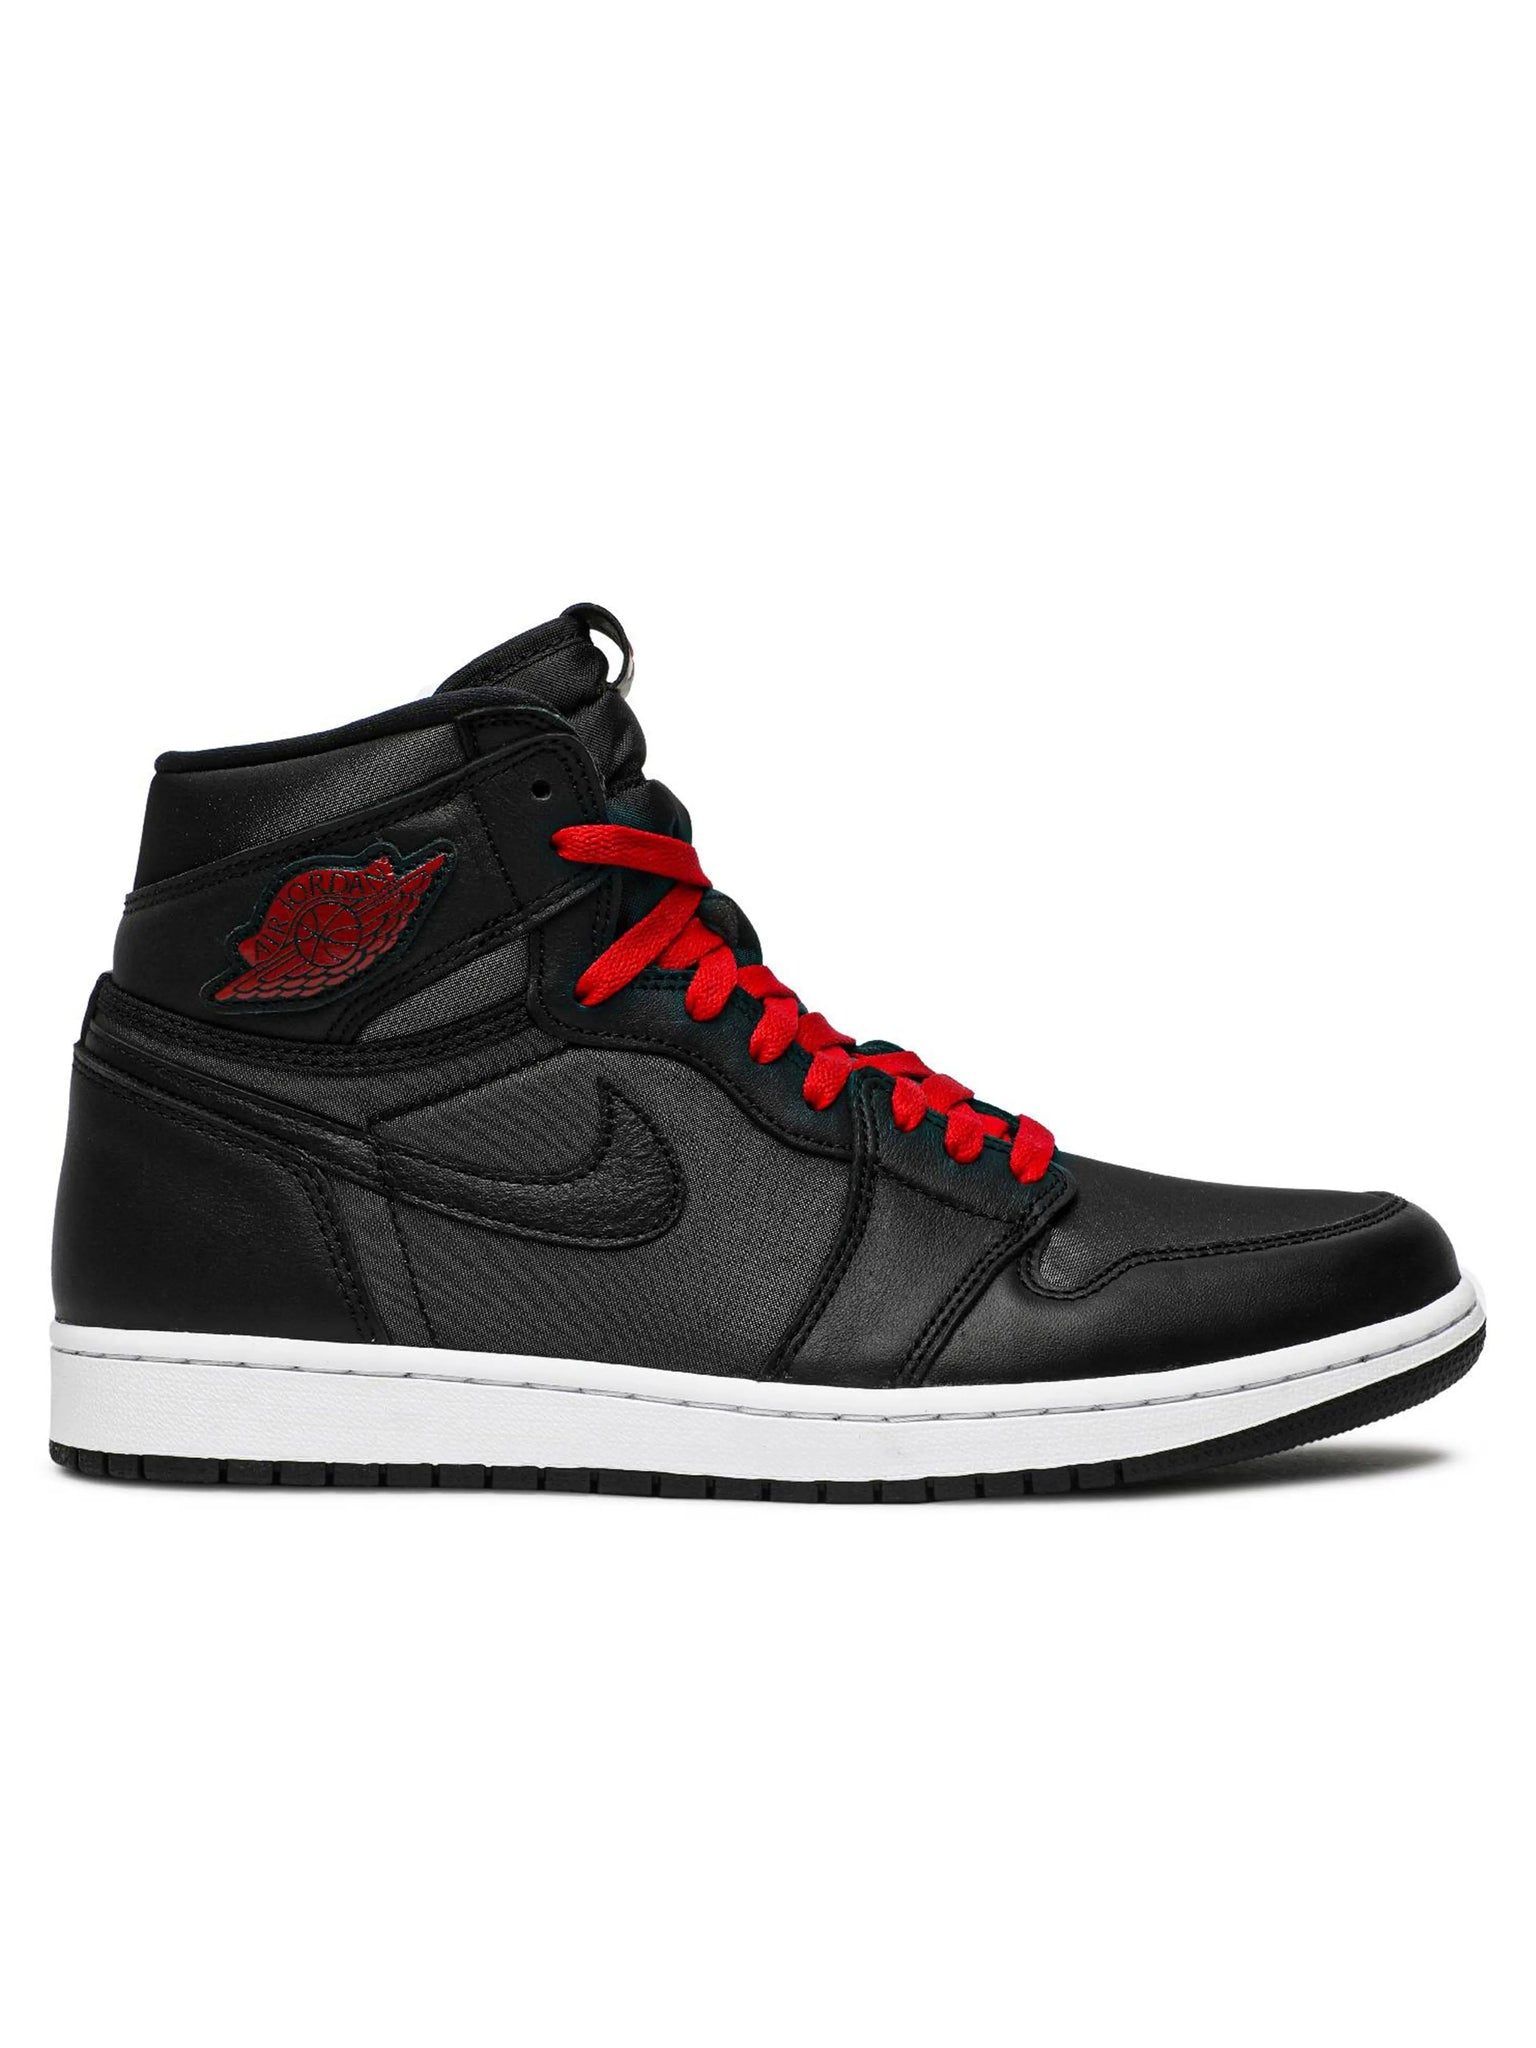 Nike Air Jordan 1 Retro High Black Satin Gym Red Prior